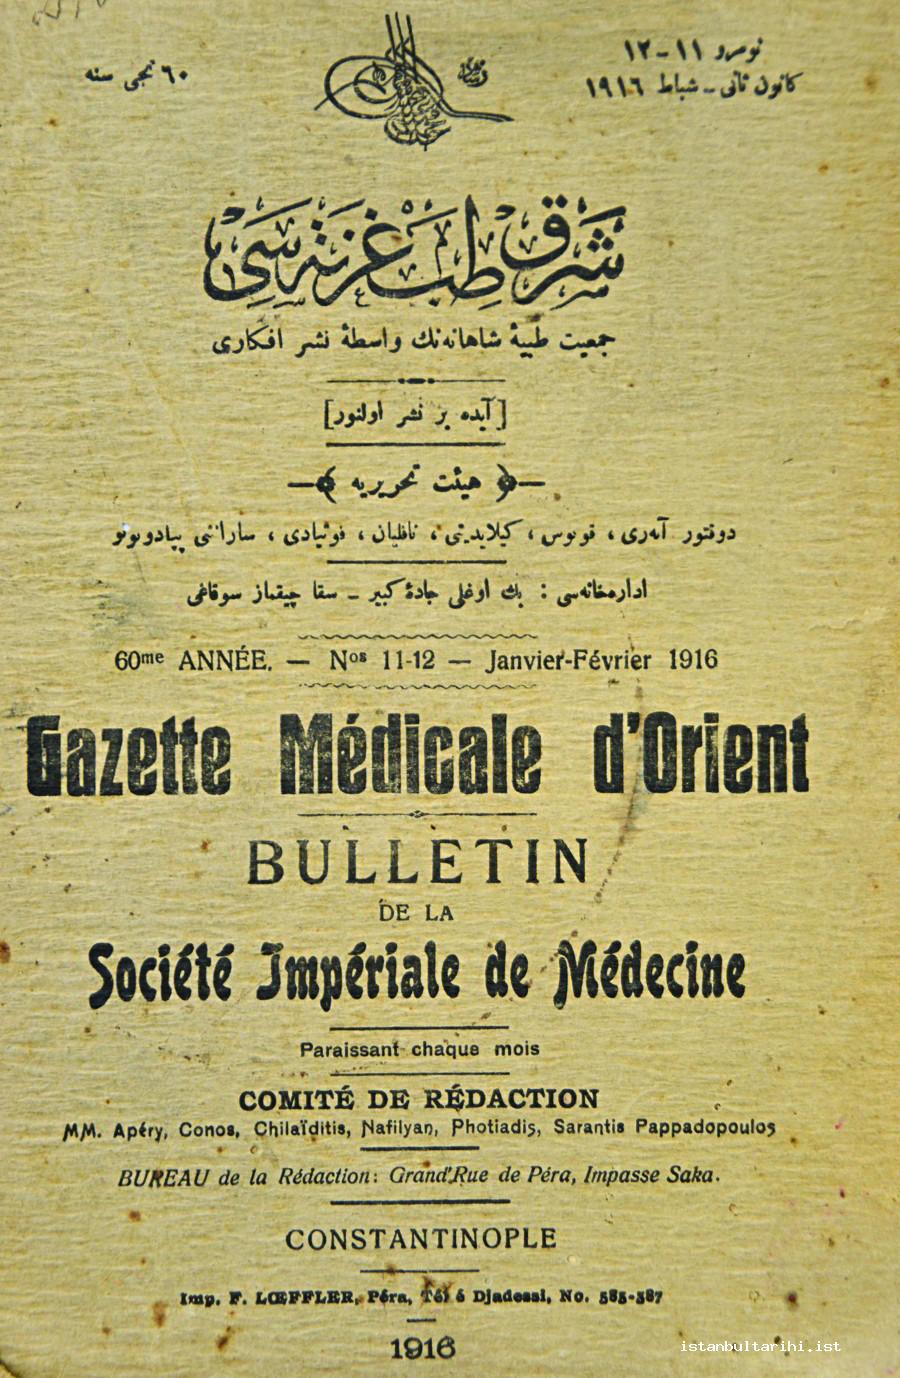 4- Gazete Médicale d’Orient (Medical Gazette of the Orient) published by Cemiyet-i Tıbbiye-i Şahane